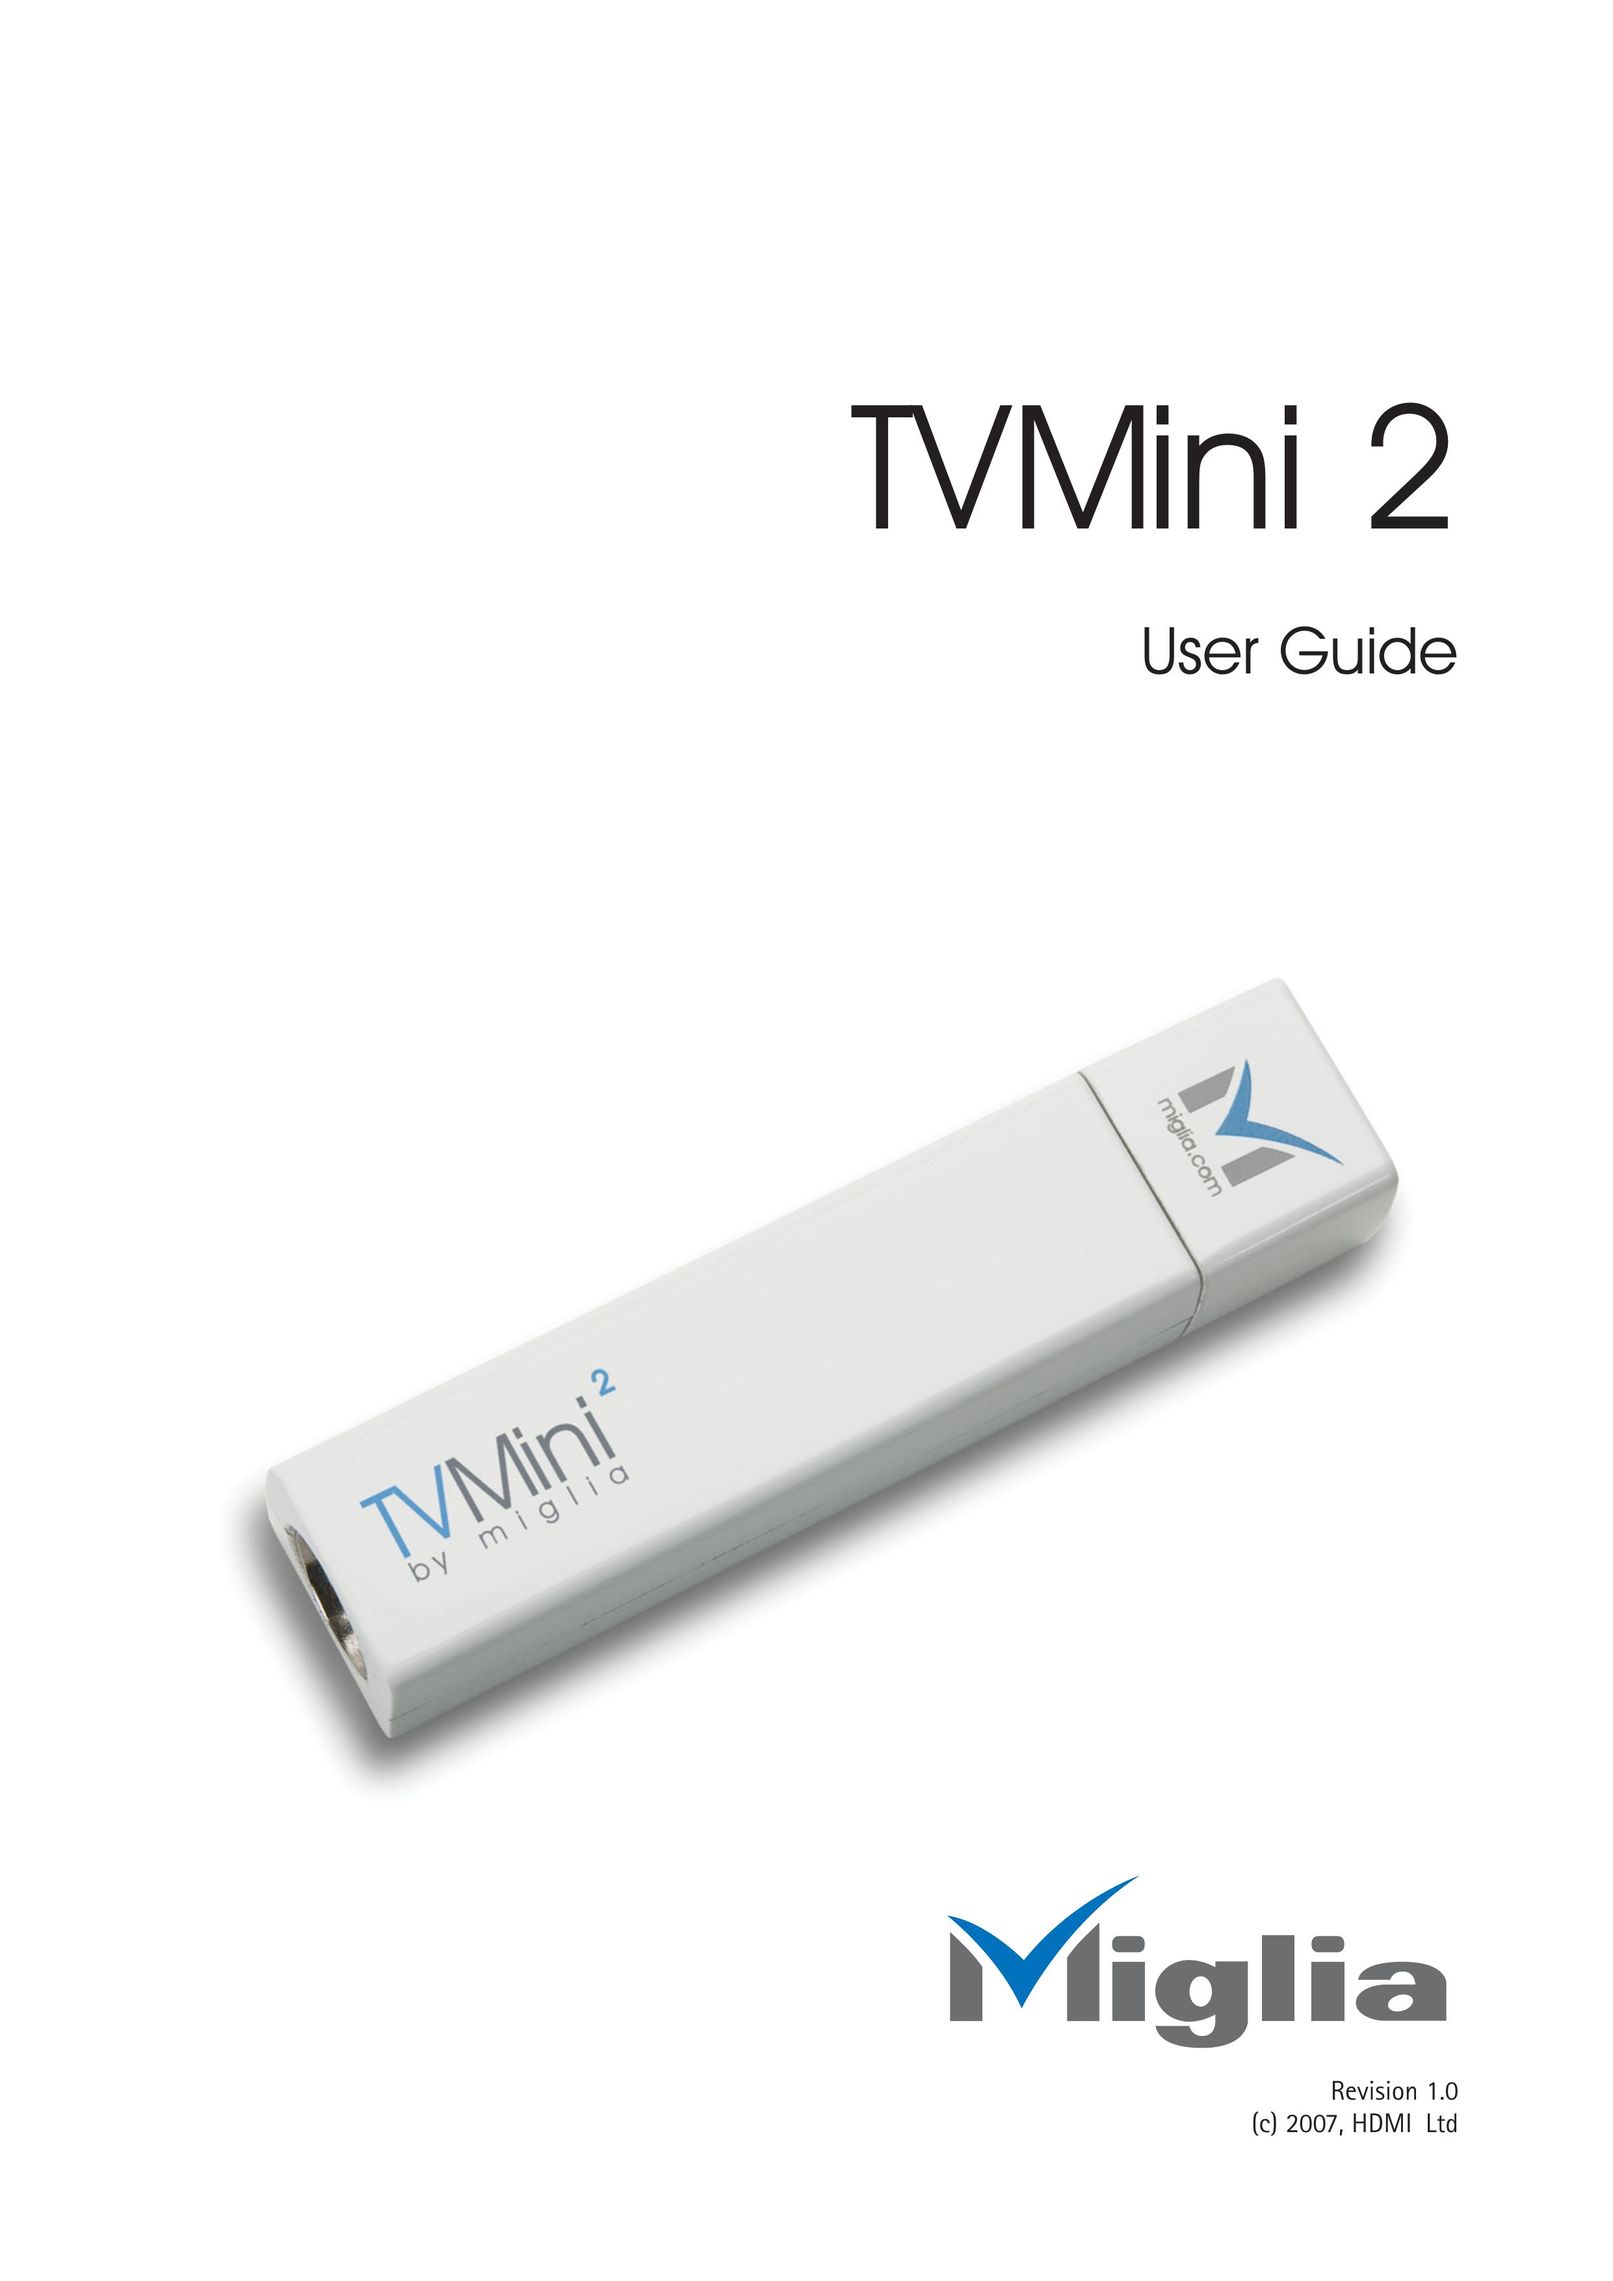 Miglia Technology TVMini 2 TV Receiver User Manual